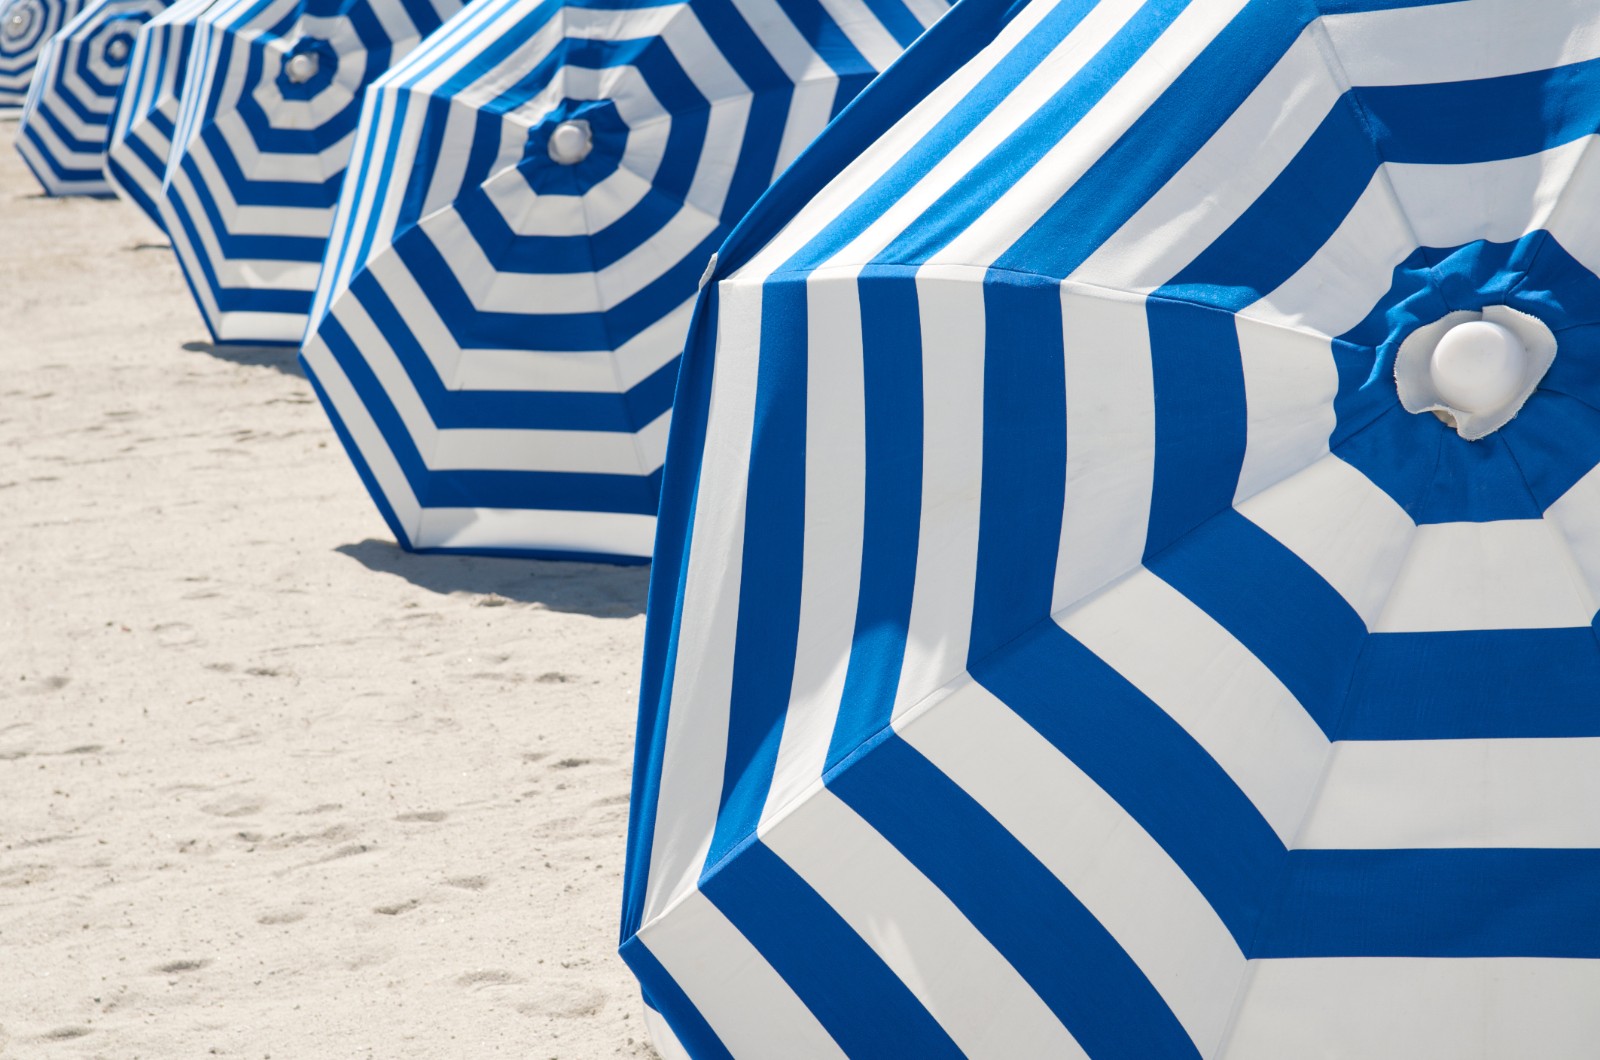 Bright blue and white striped beach umbrellas in a row on the Florida beach.